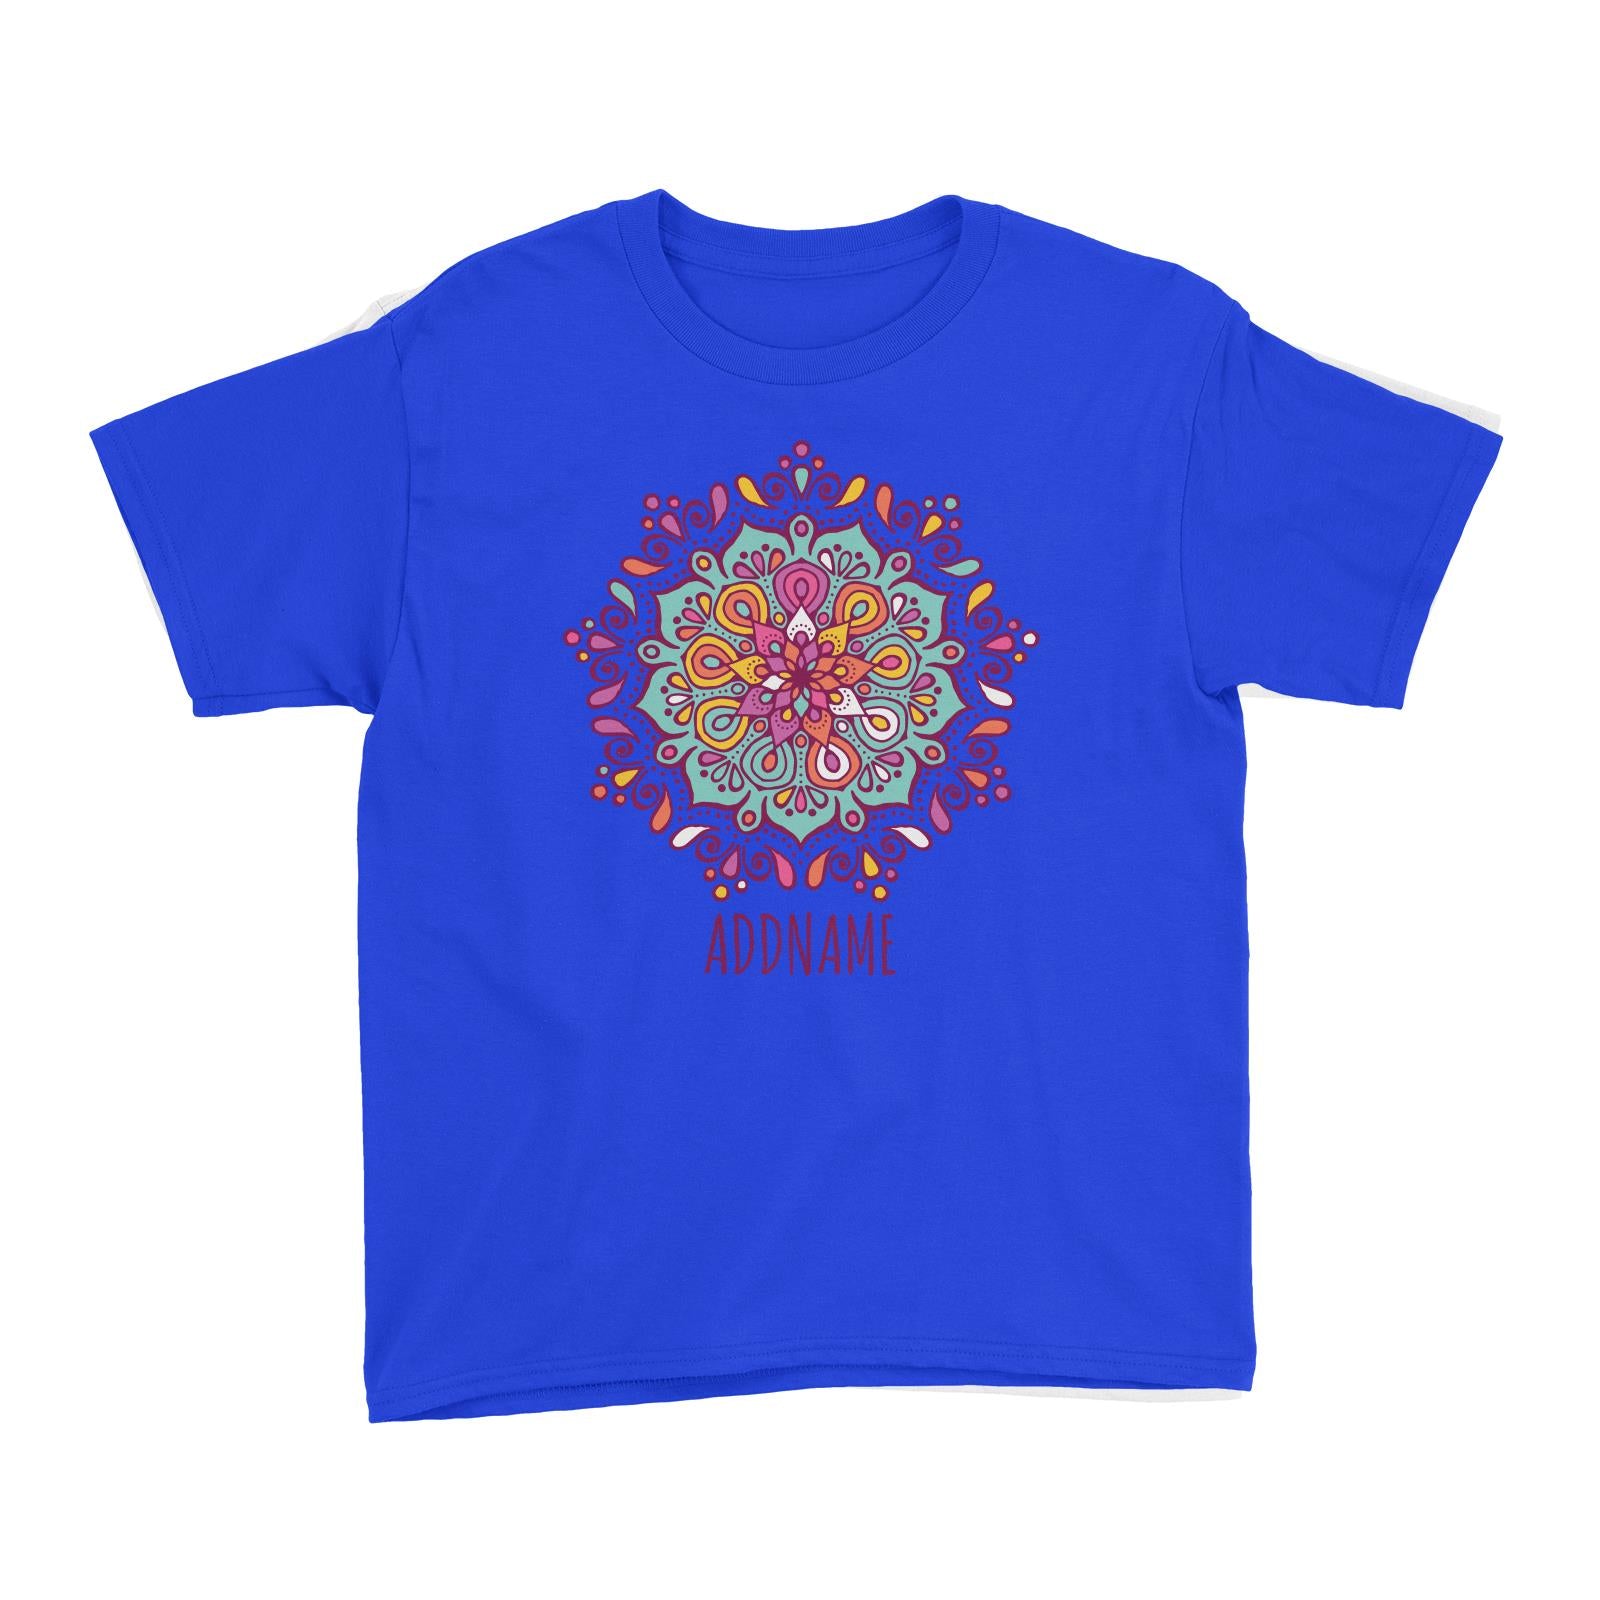 Colourful Mandala 1 Addname Kid's T-Shirt